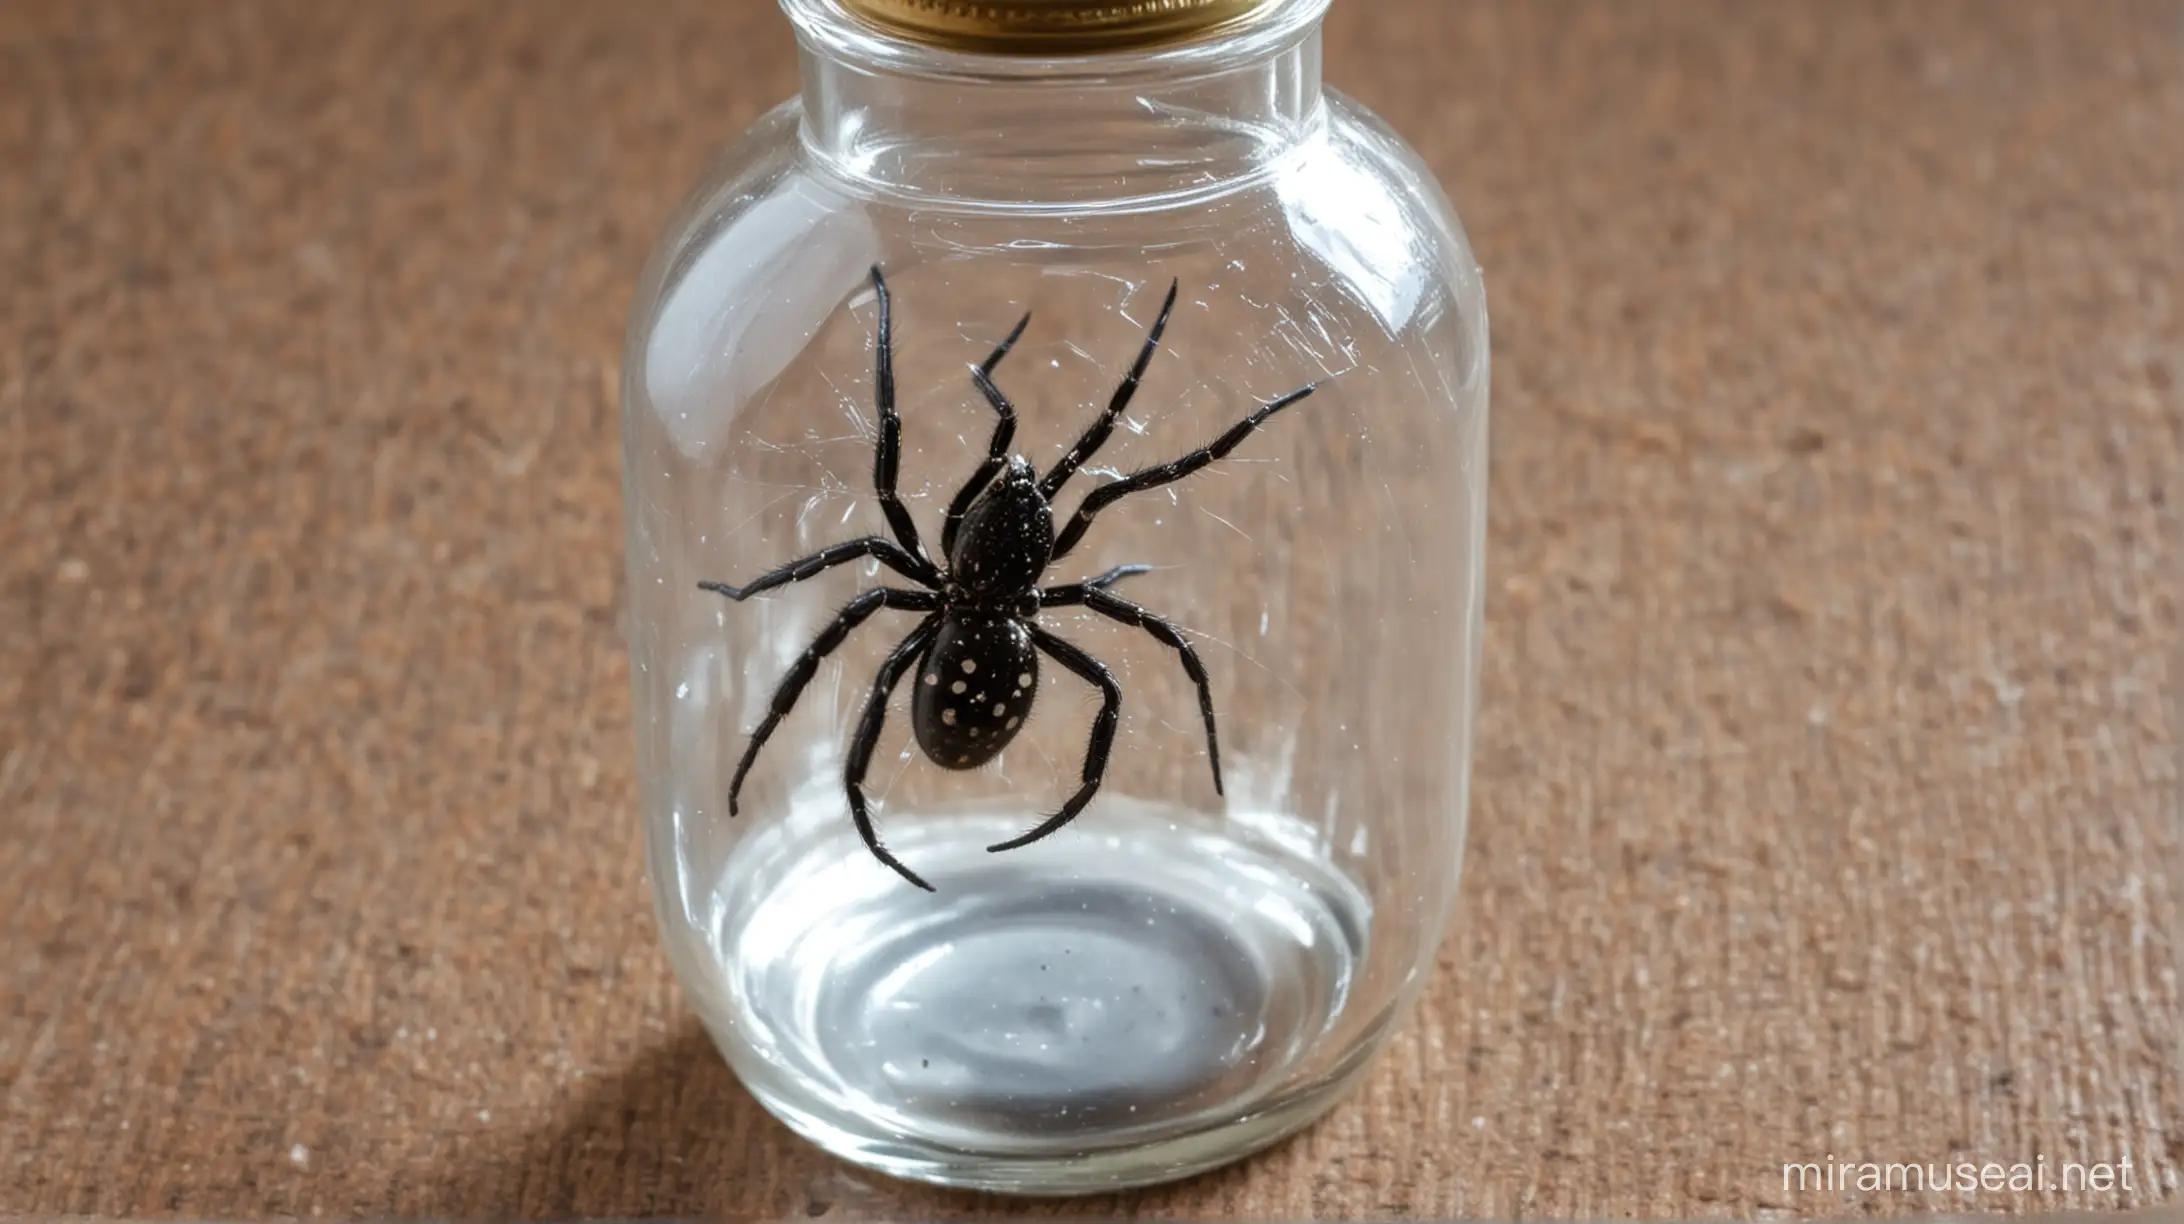 Spider Emerging from Opened Bottle